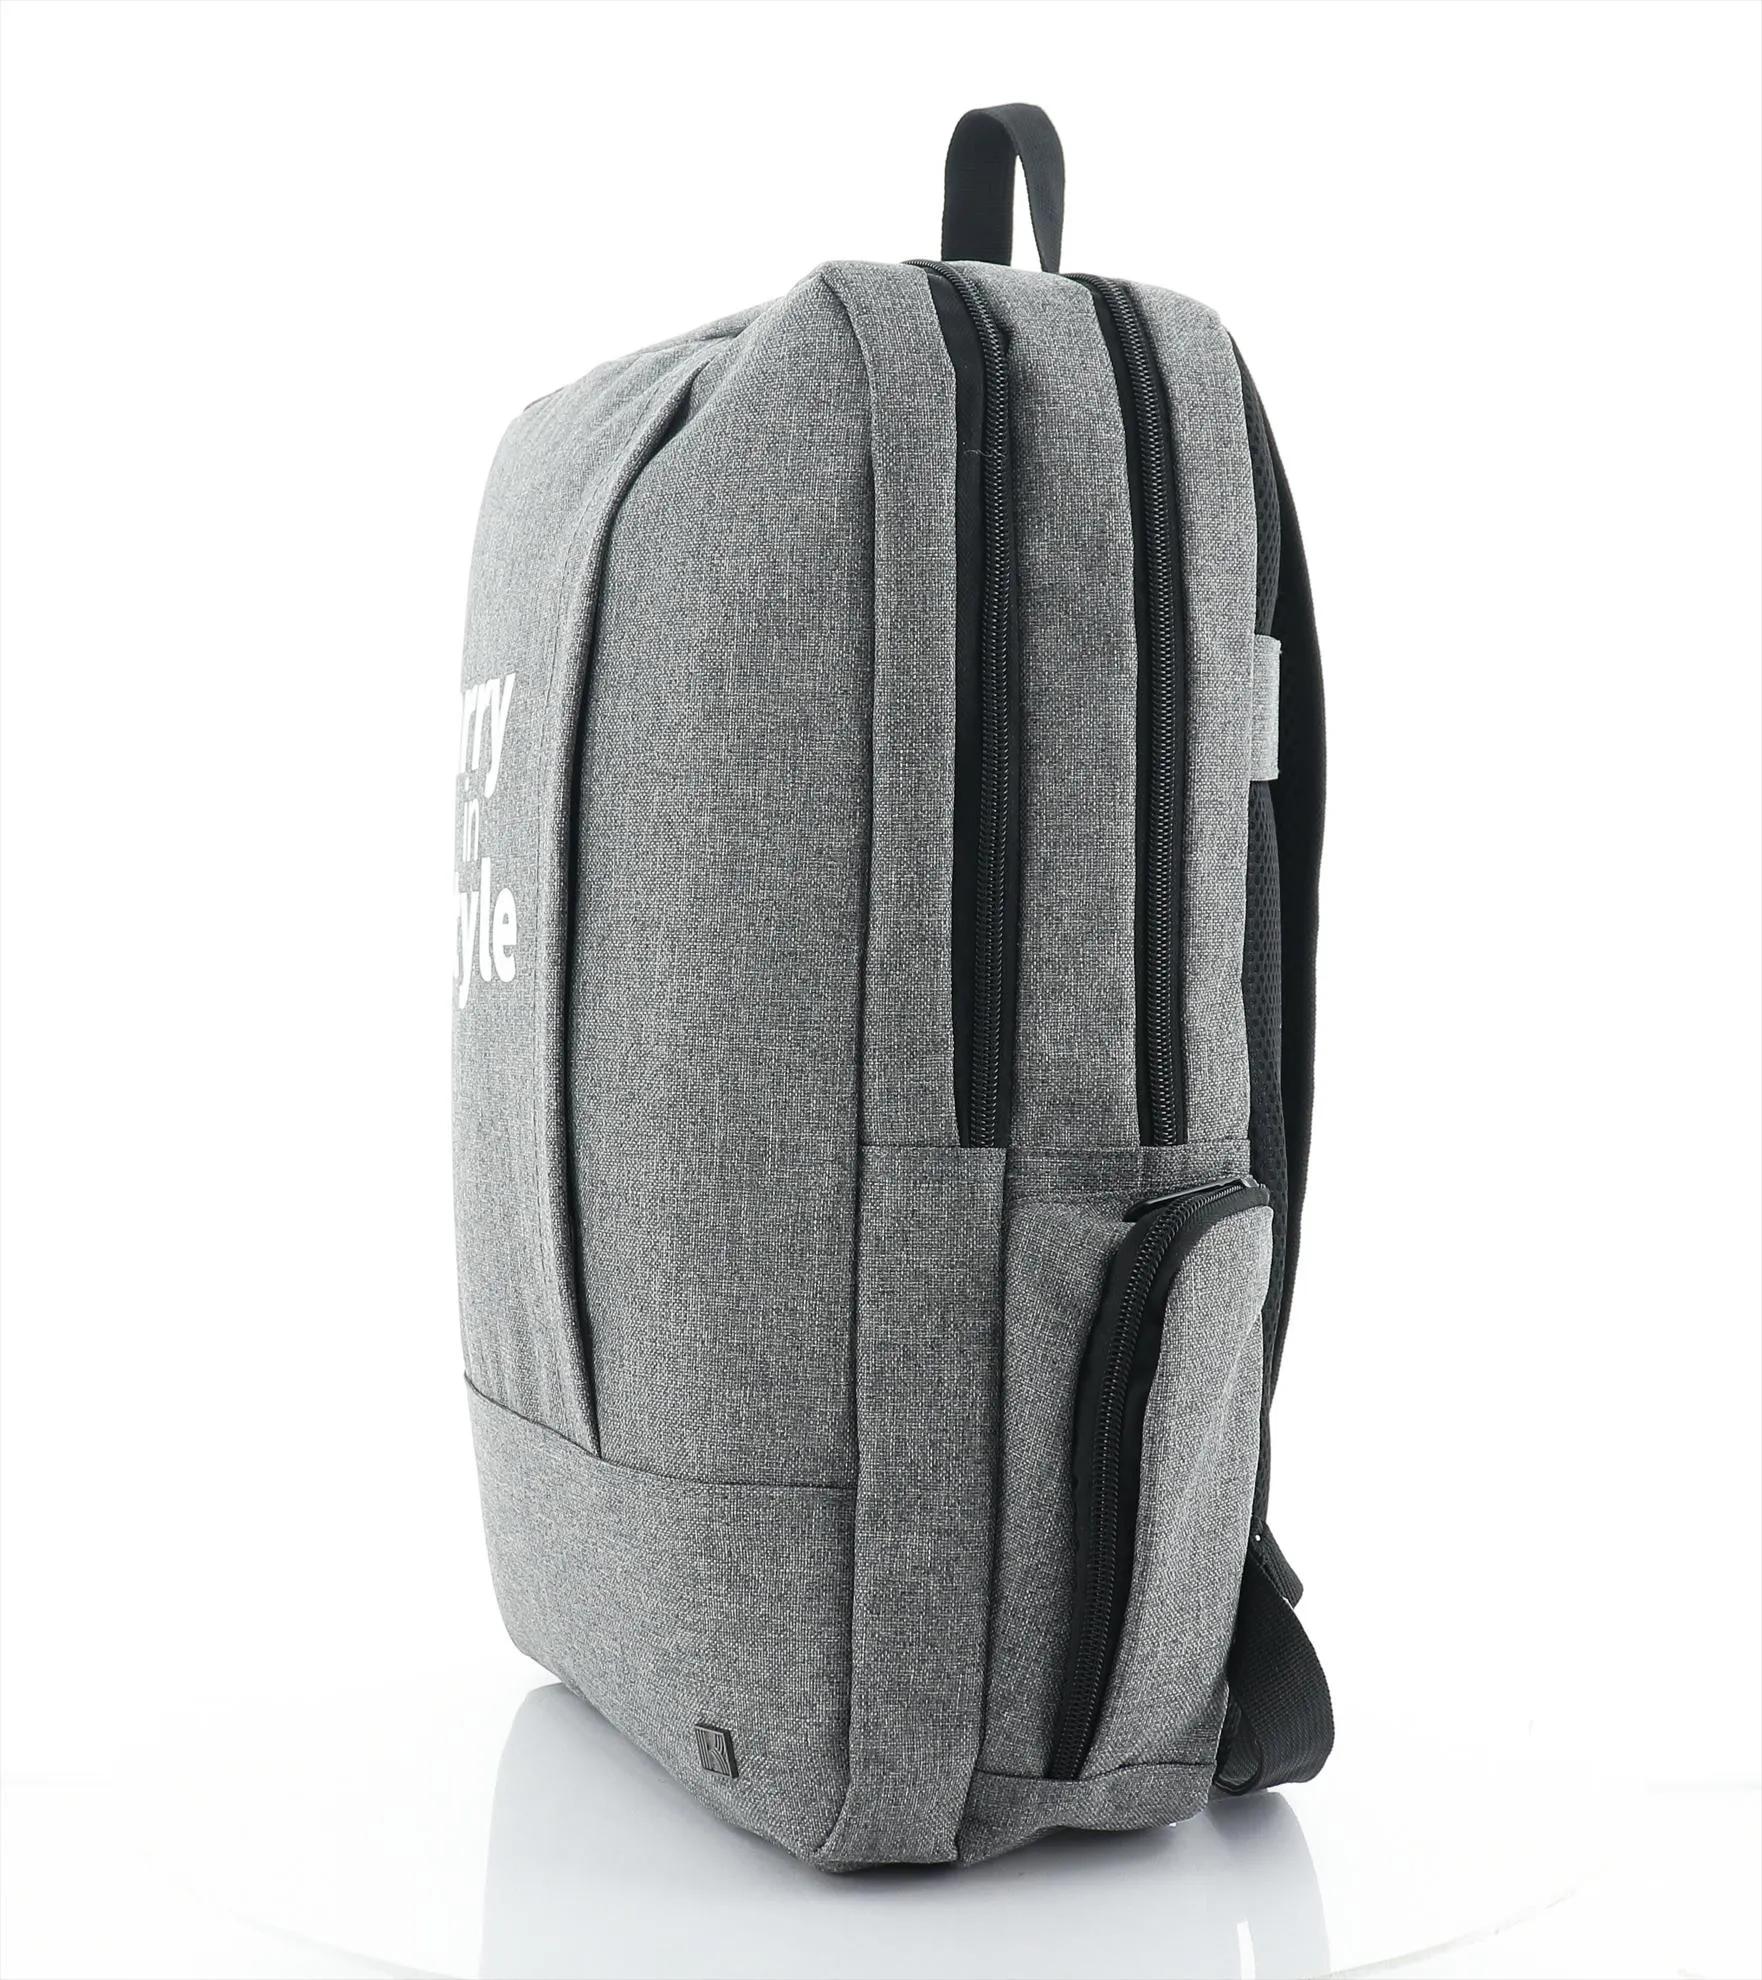 KAPSTON® Pierce Backpack 71 of 77